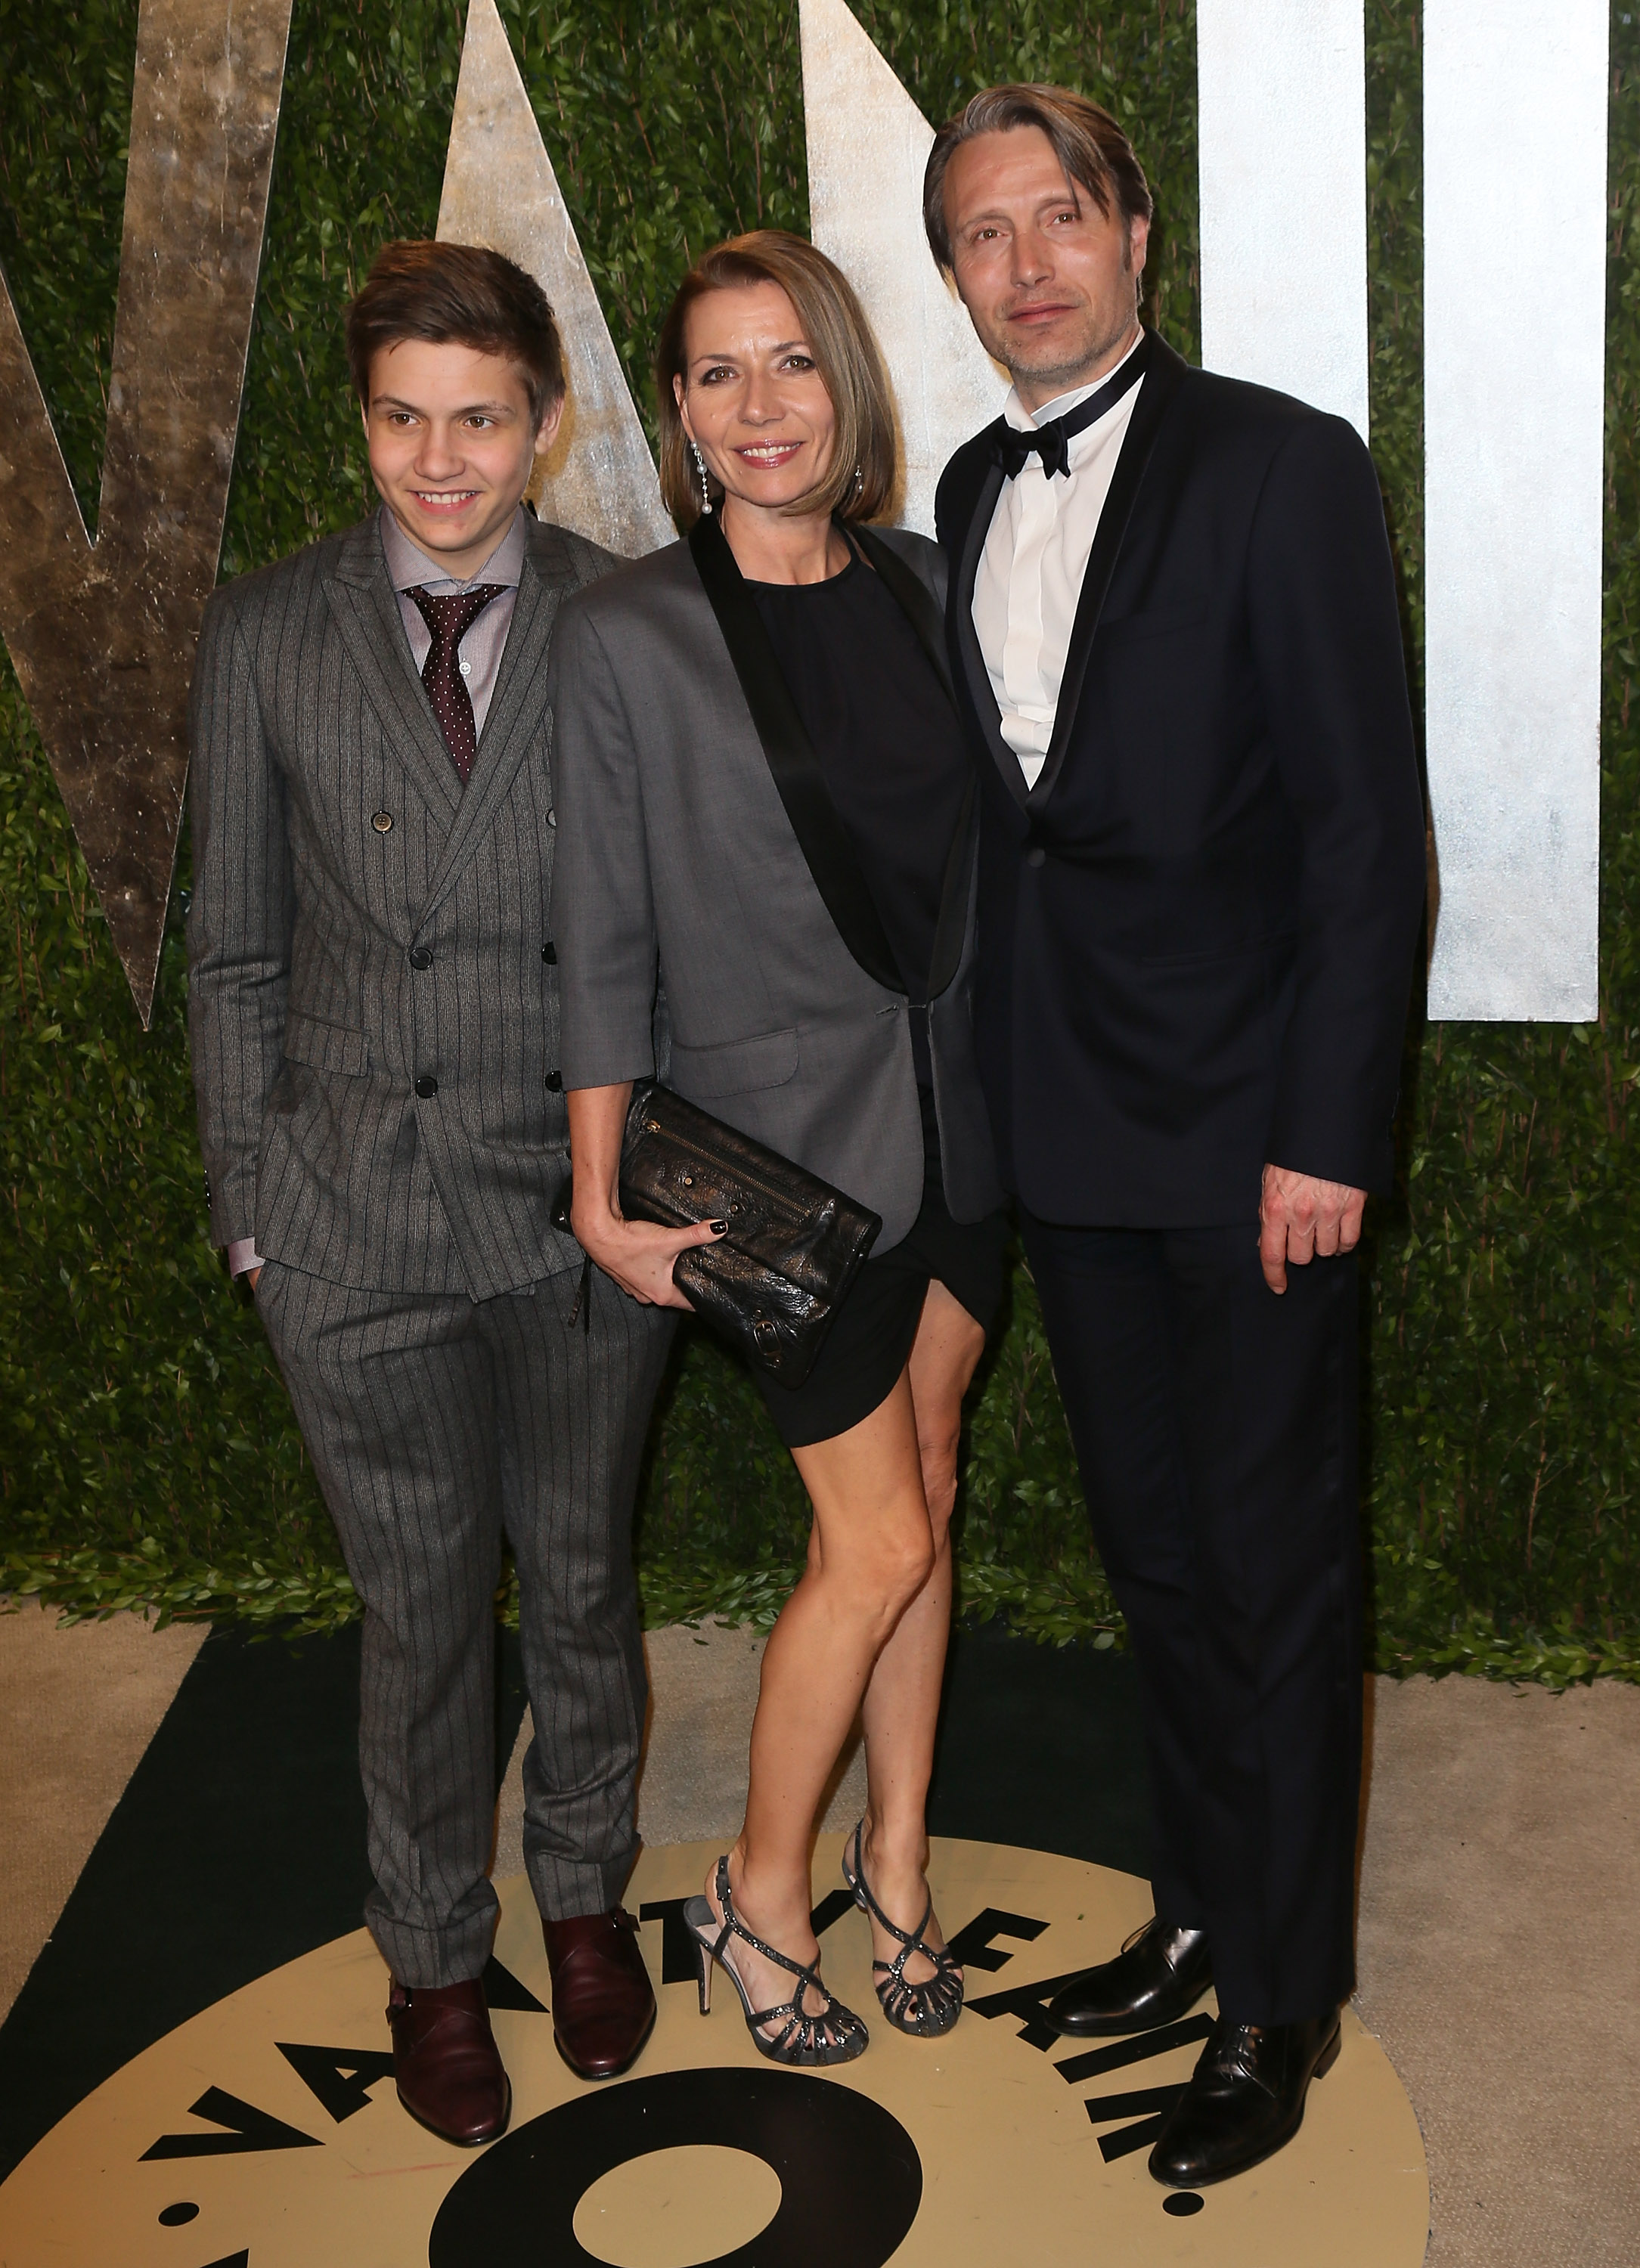 Mads Mikkelsen, Carl Mikkelsen et Hanne Jacobsen à la soirée des Oscars Vanity Fair le 24 février 2013 en Californie. | Source : Getty Images